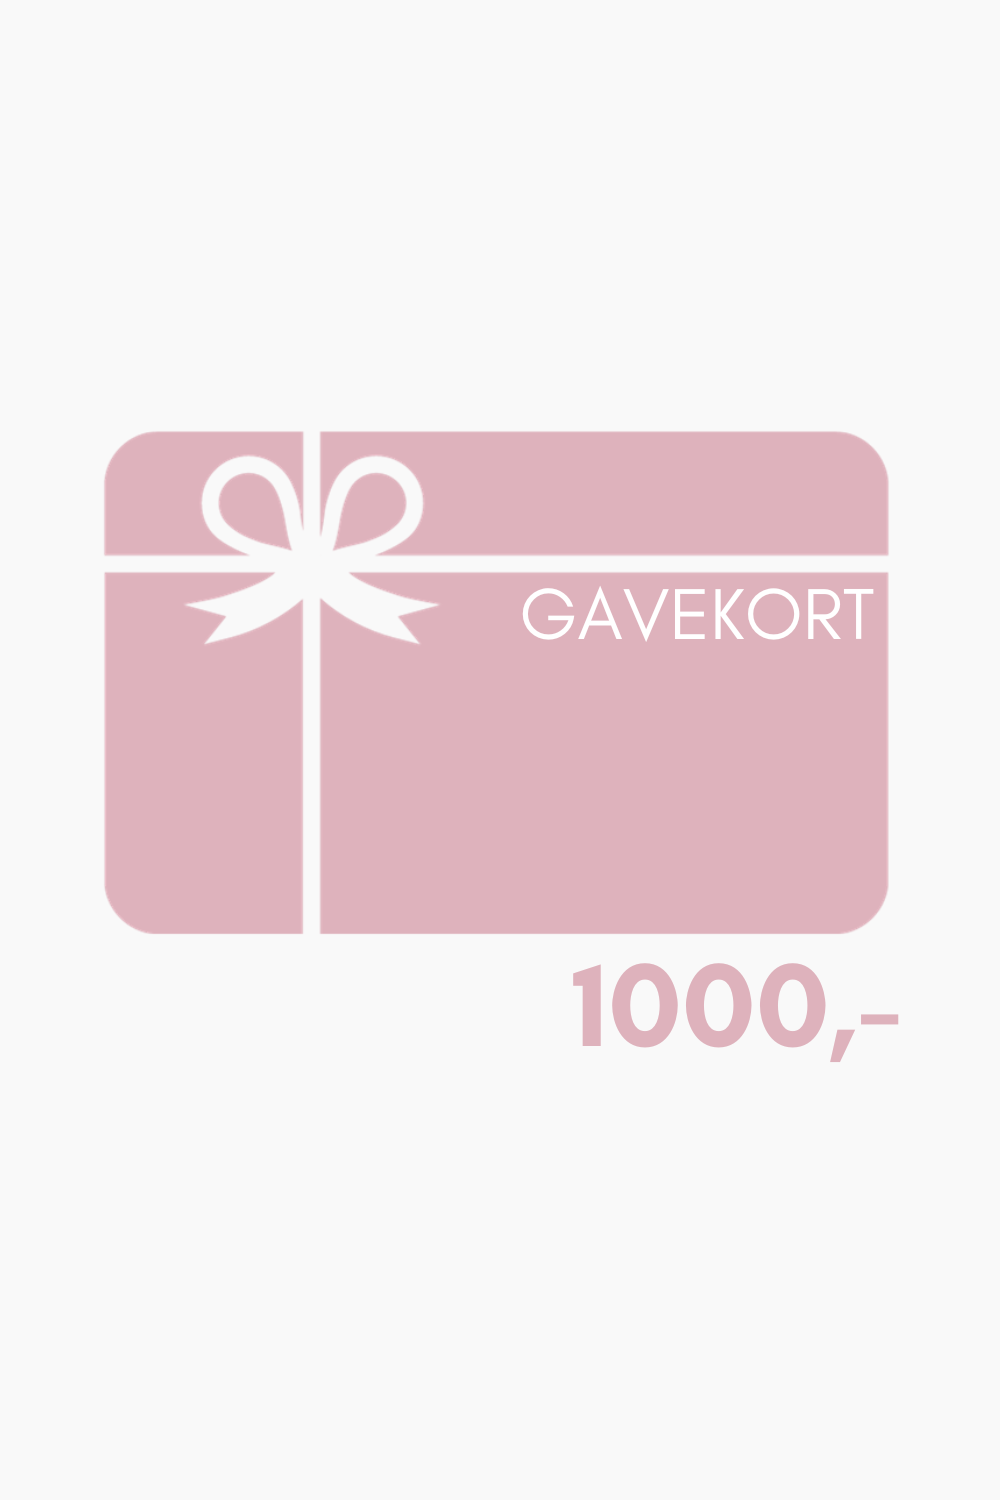 QNTS Gavekort 1000 kr